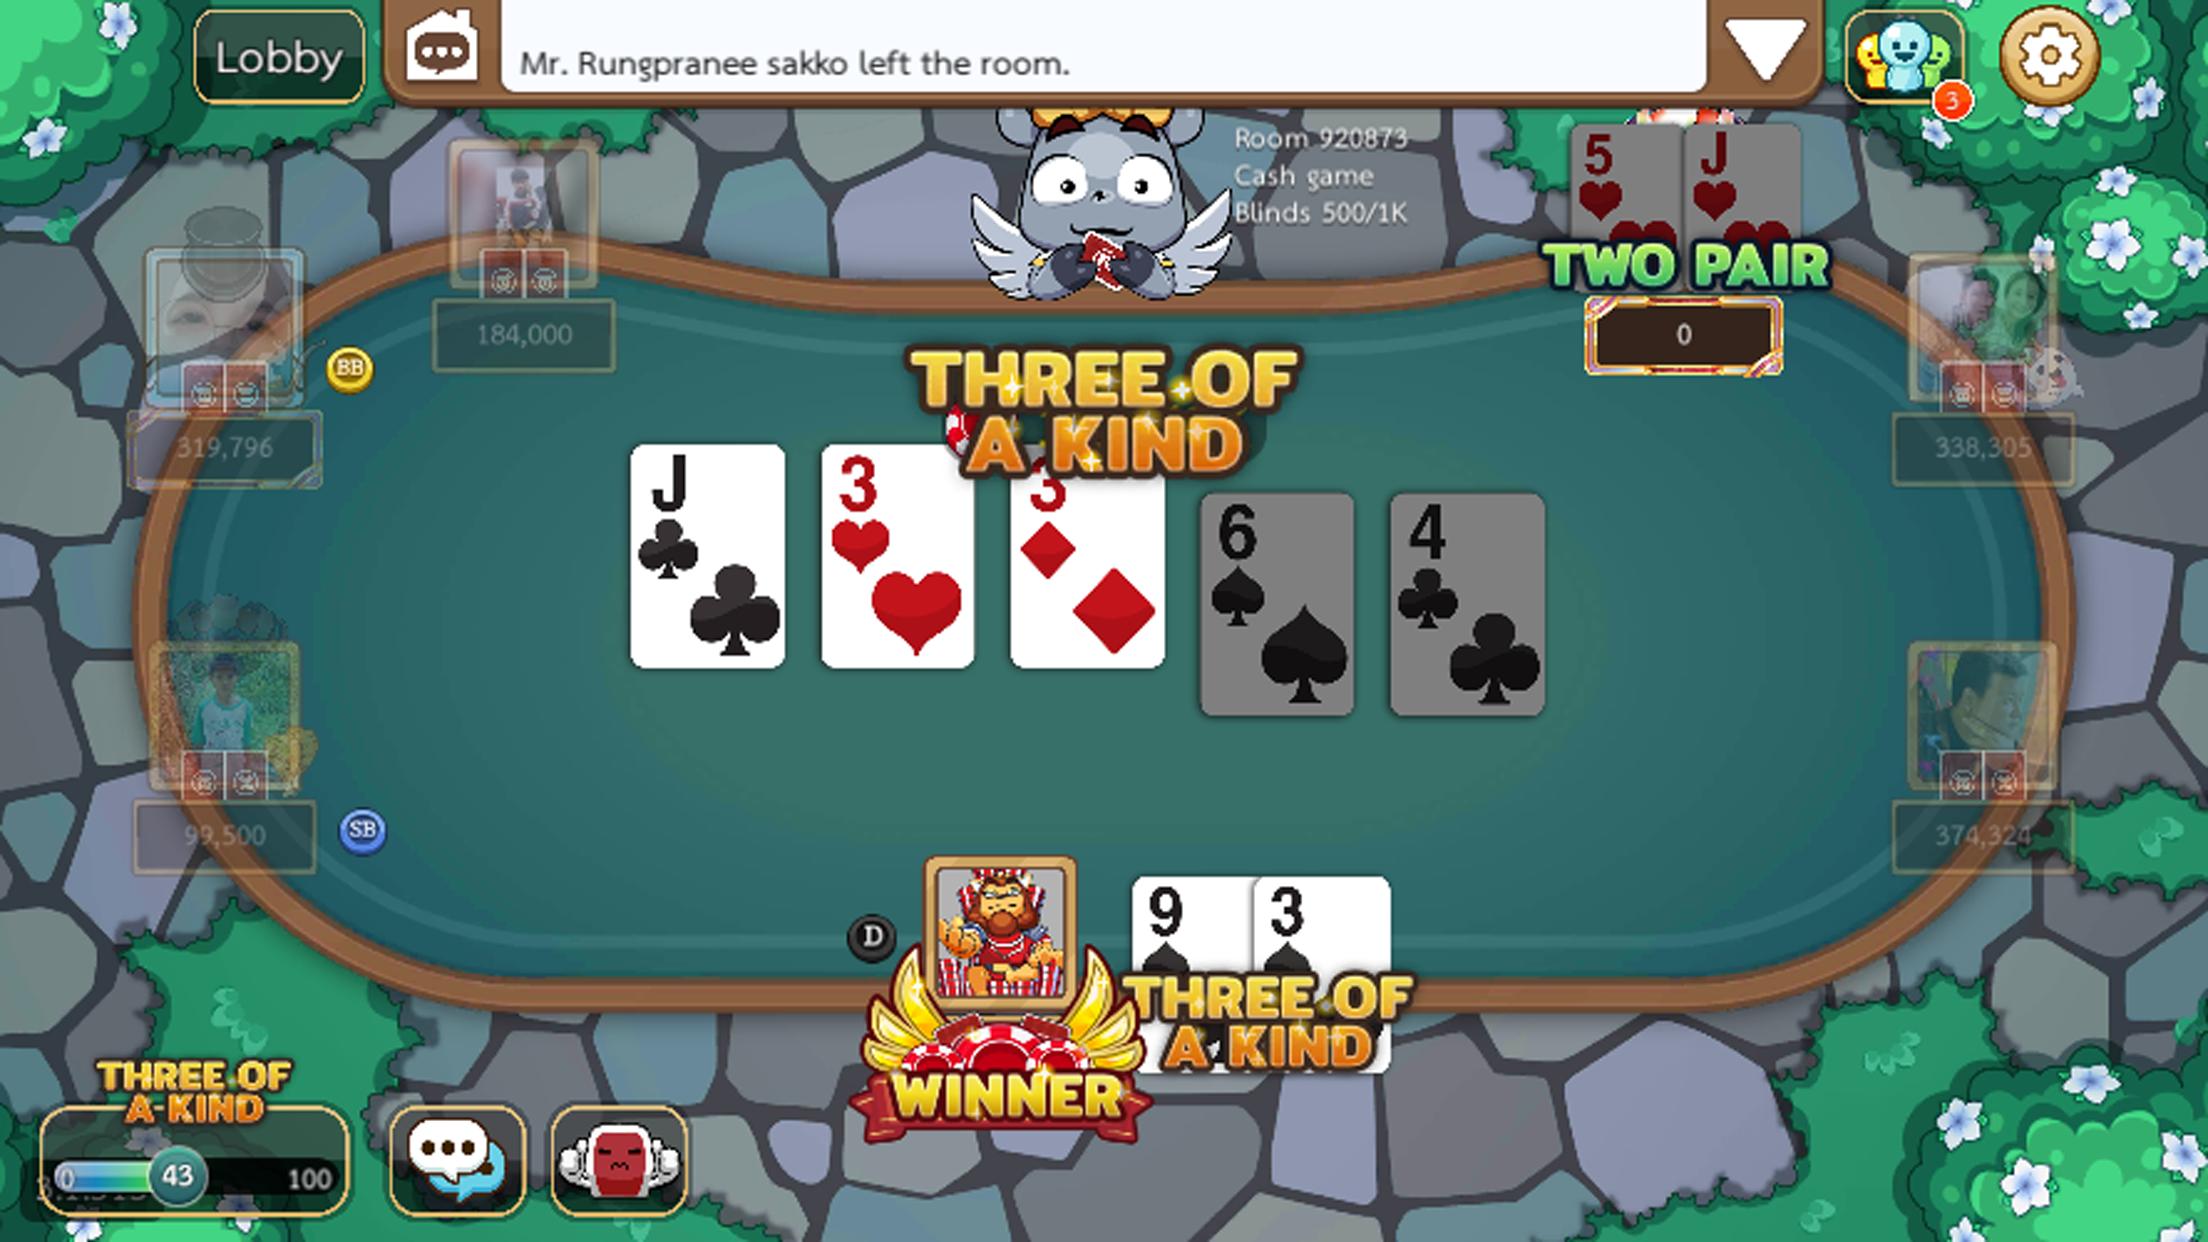 Dummy & Toon Poker Texas slot Online Card Game 3.4.691 Screenshot 8